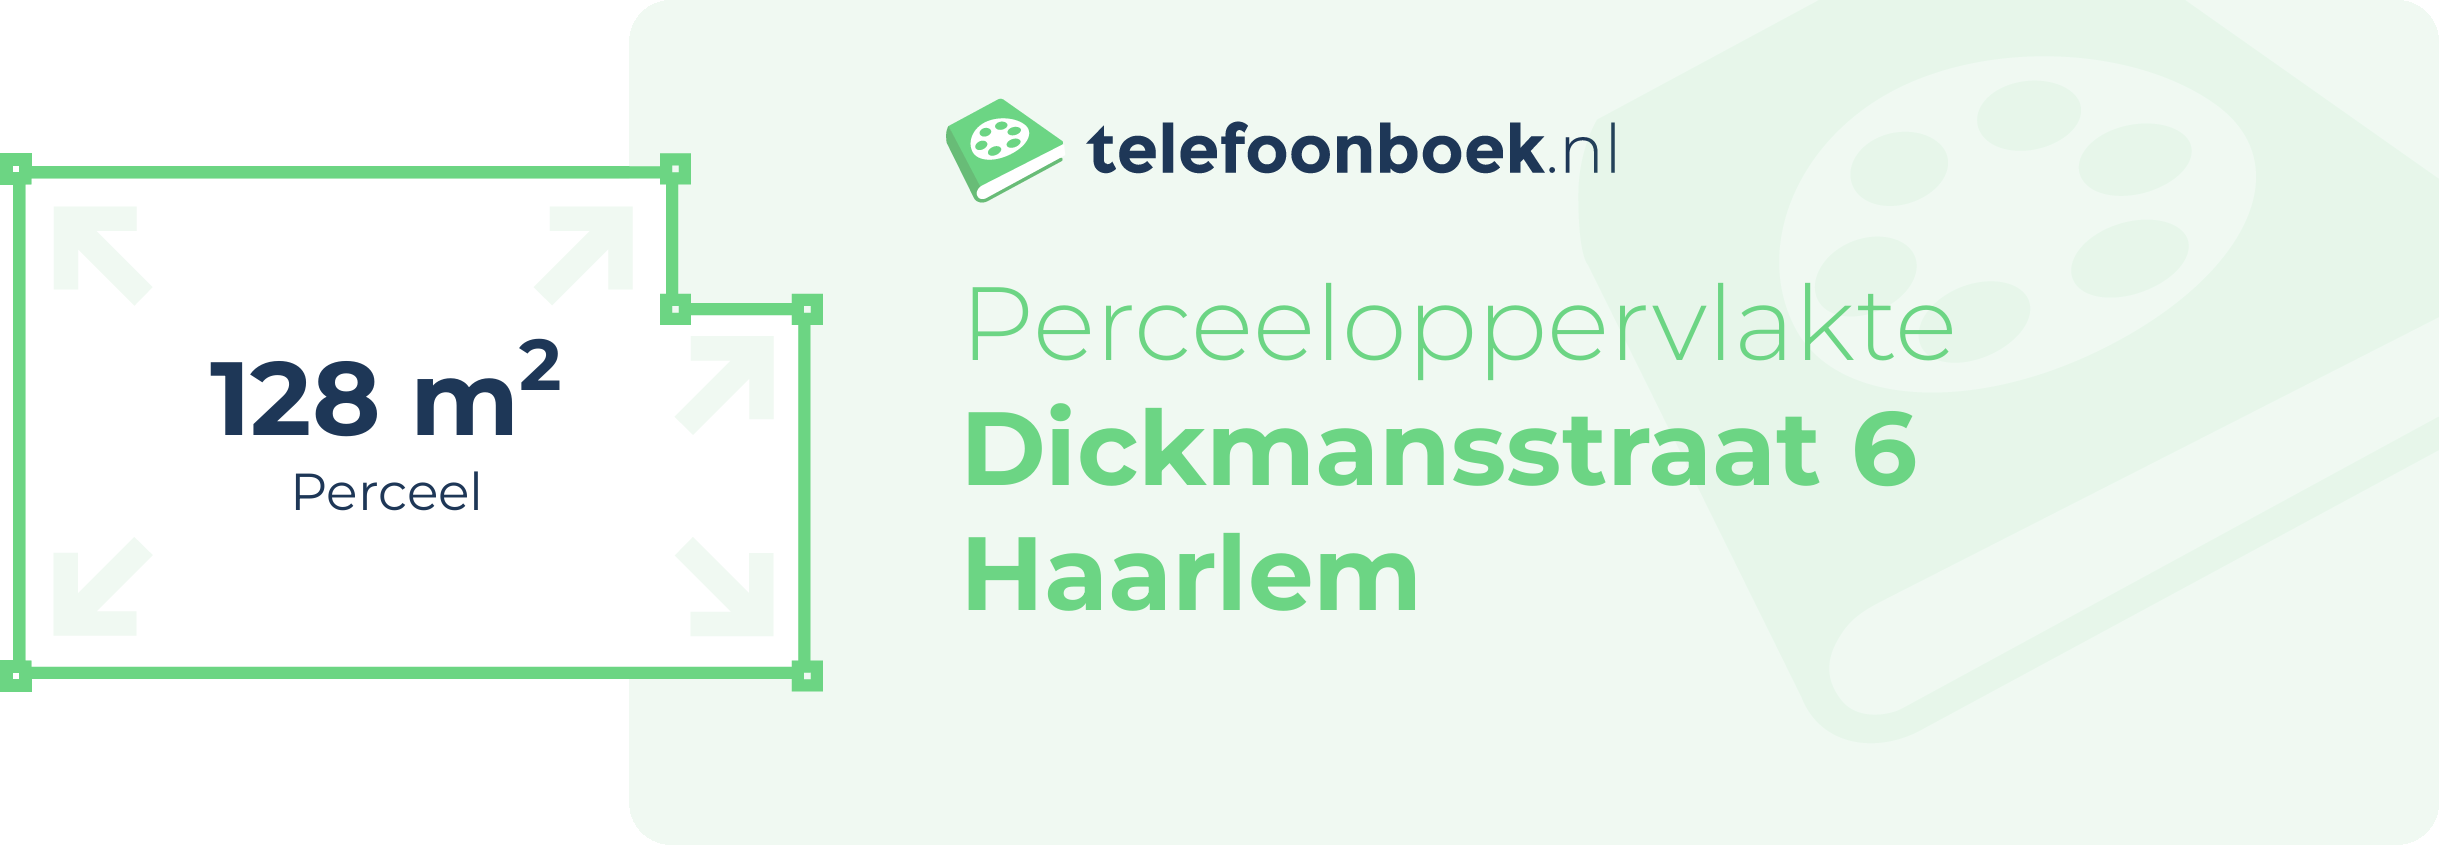 Perceeloppervlakte Dickmansstraat 6 Haarlem